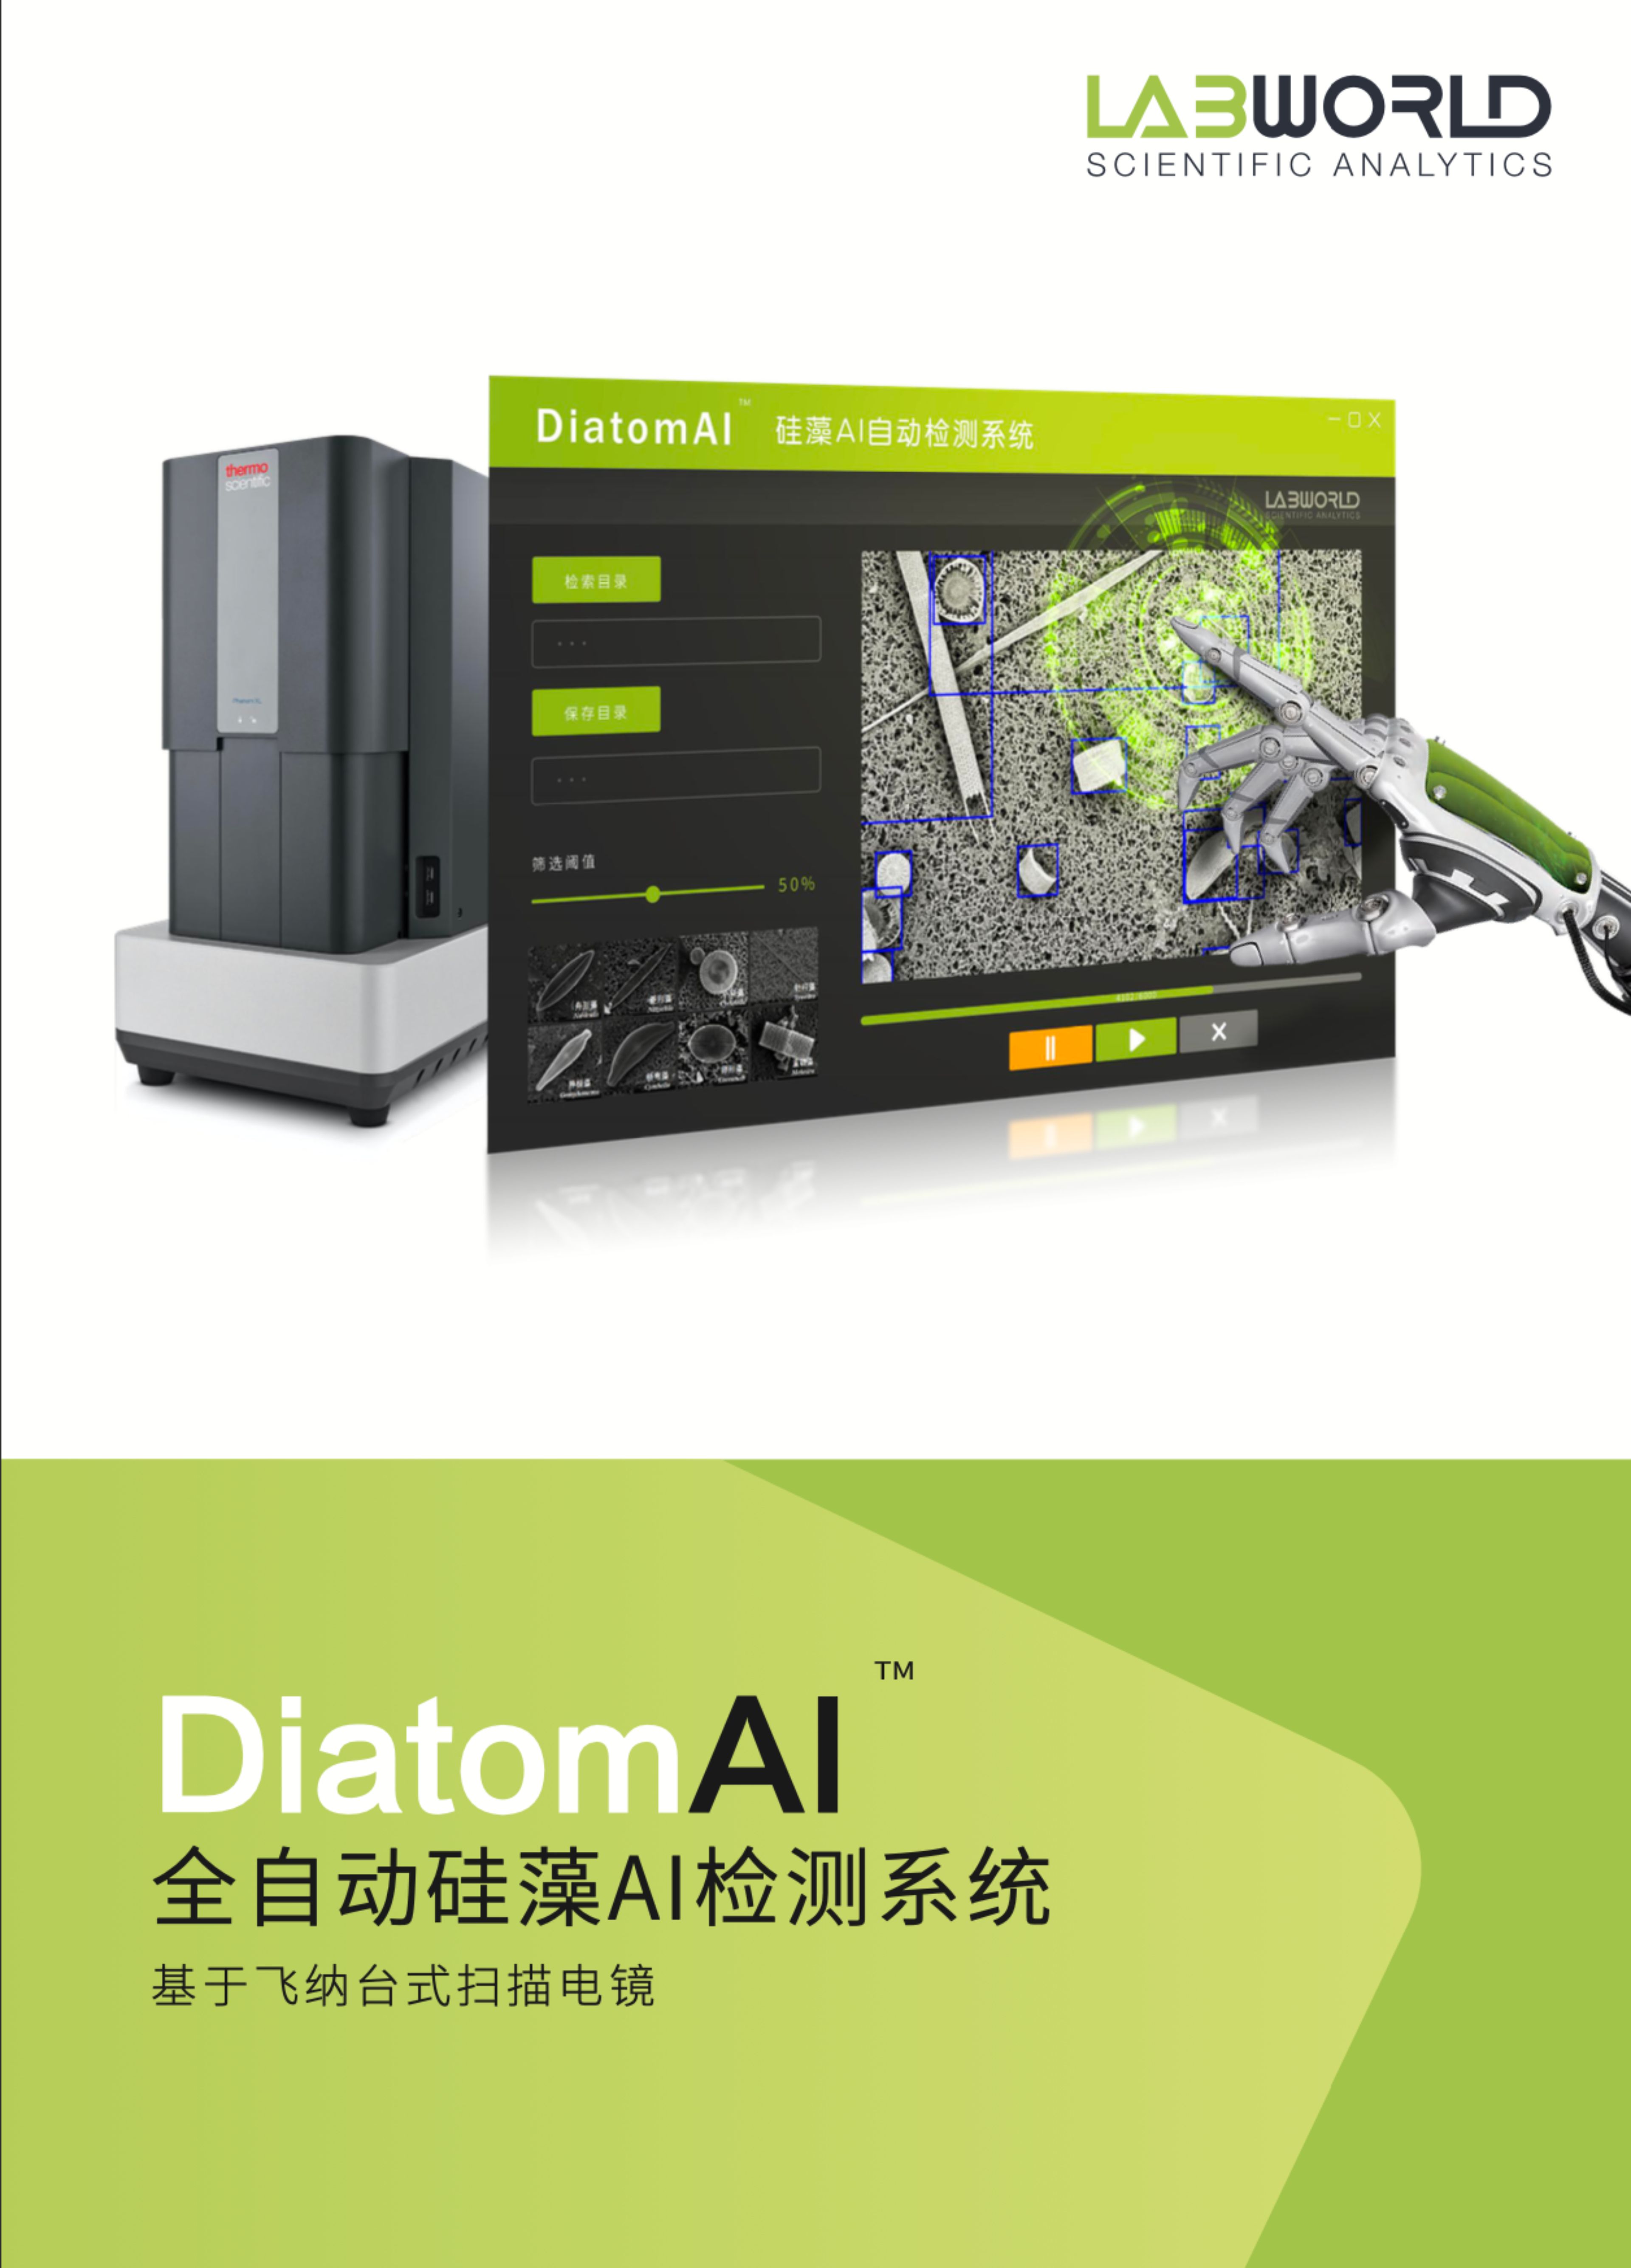 Diatom AI 自动检测系统